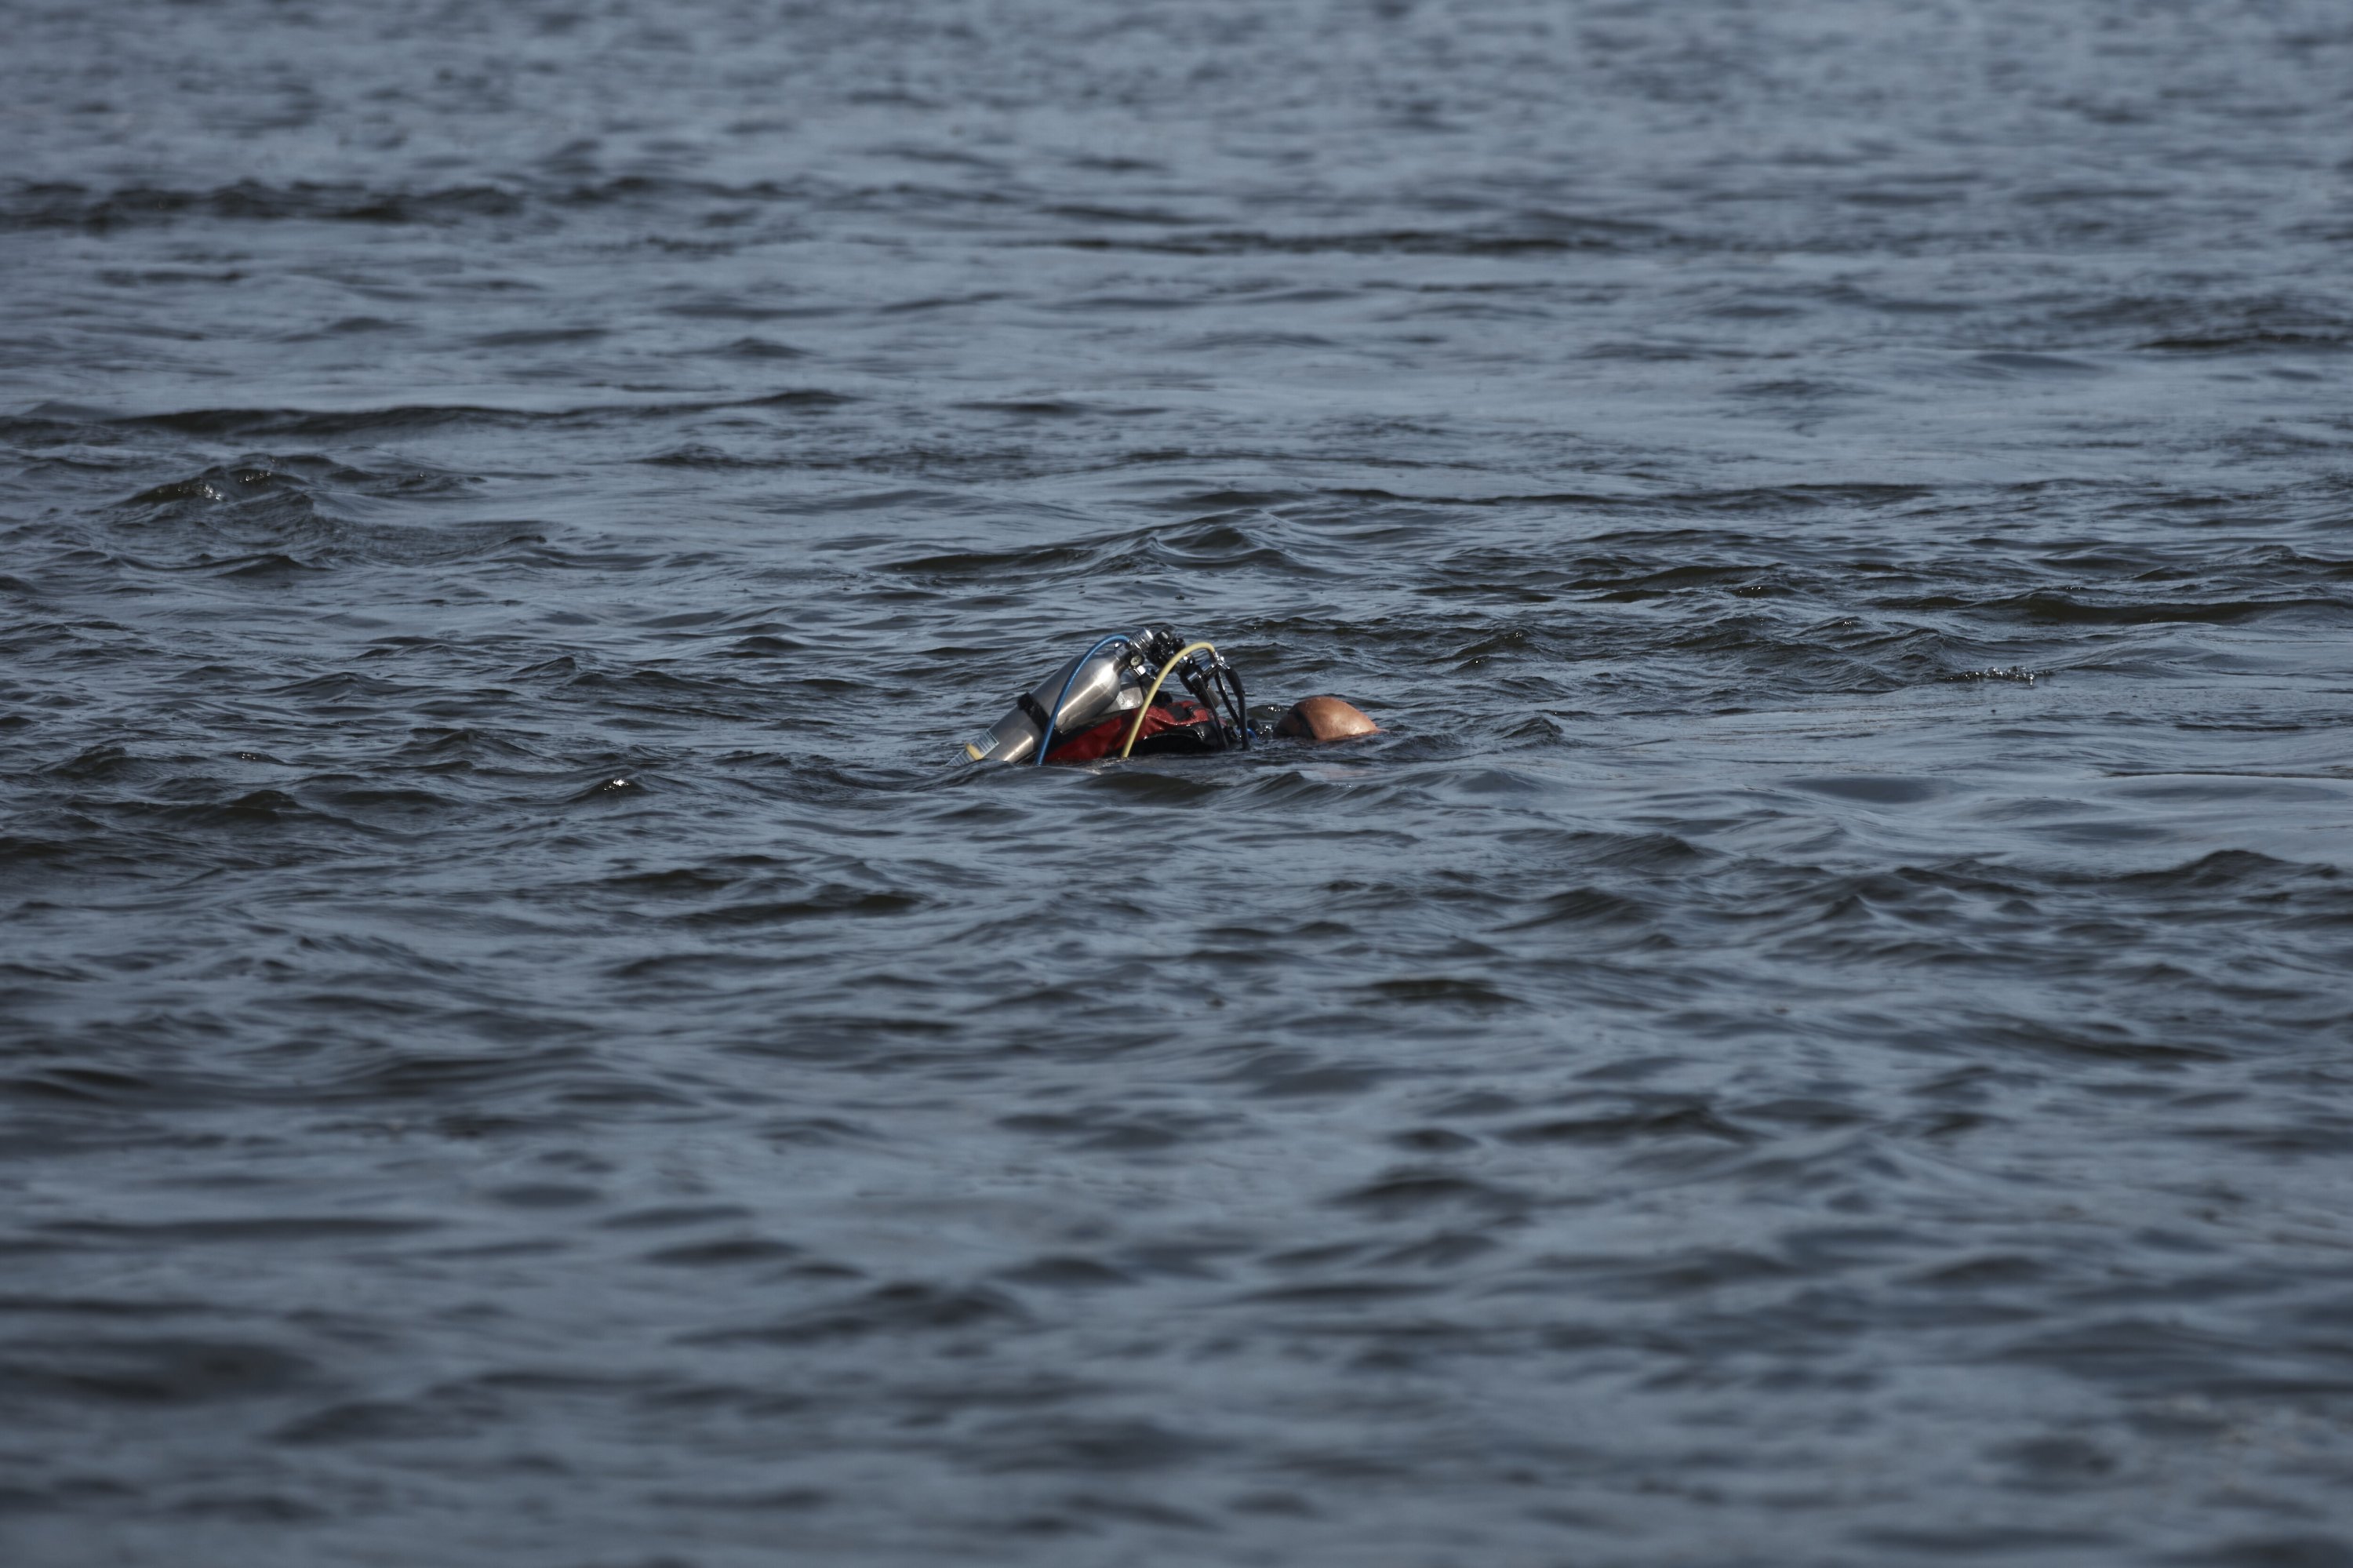 New York Scuba Divers Help Clean Up Ocean